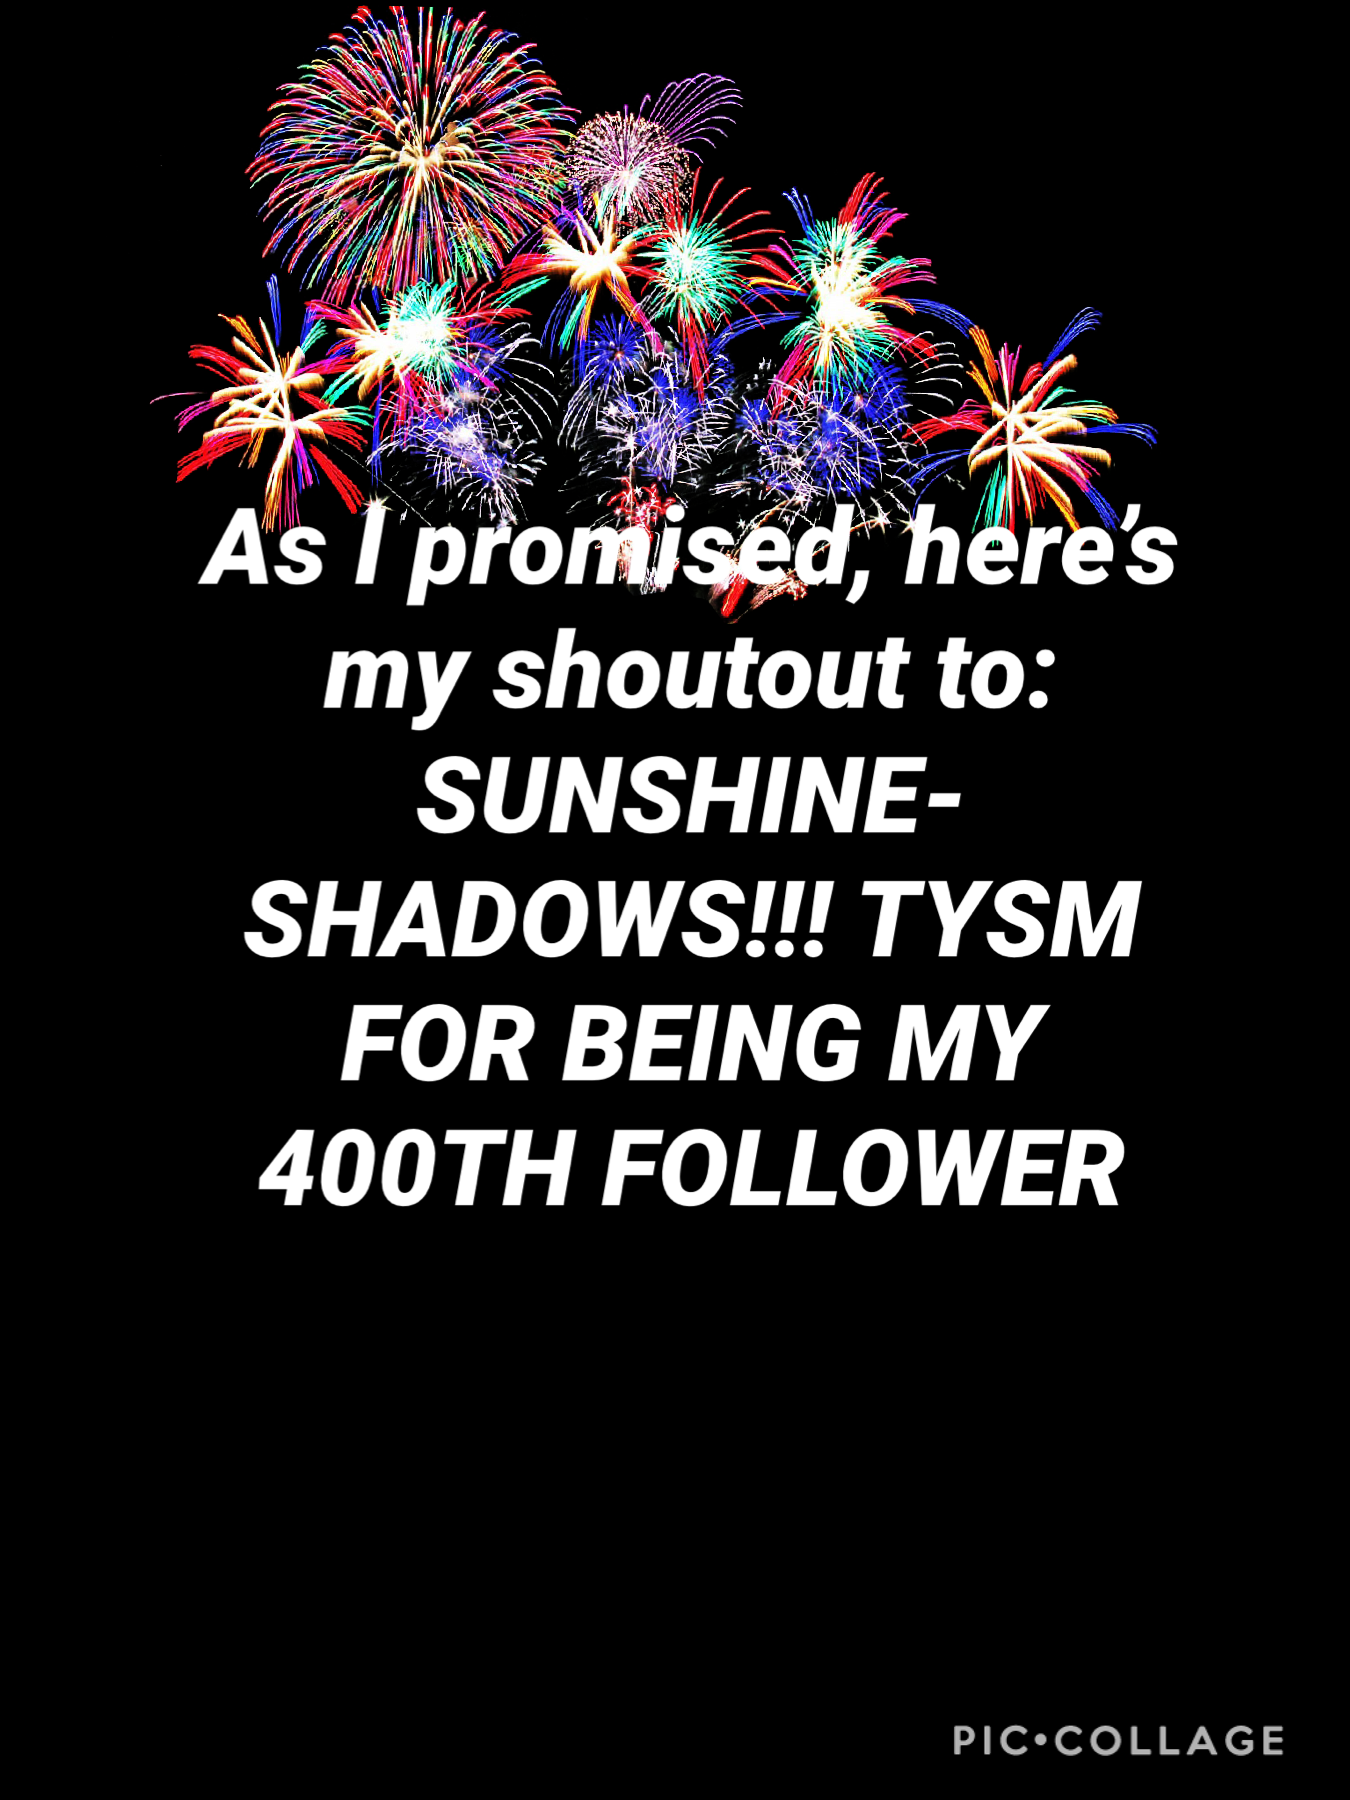 400th follower tap
Tysm guys Ily all